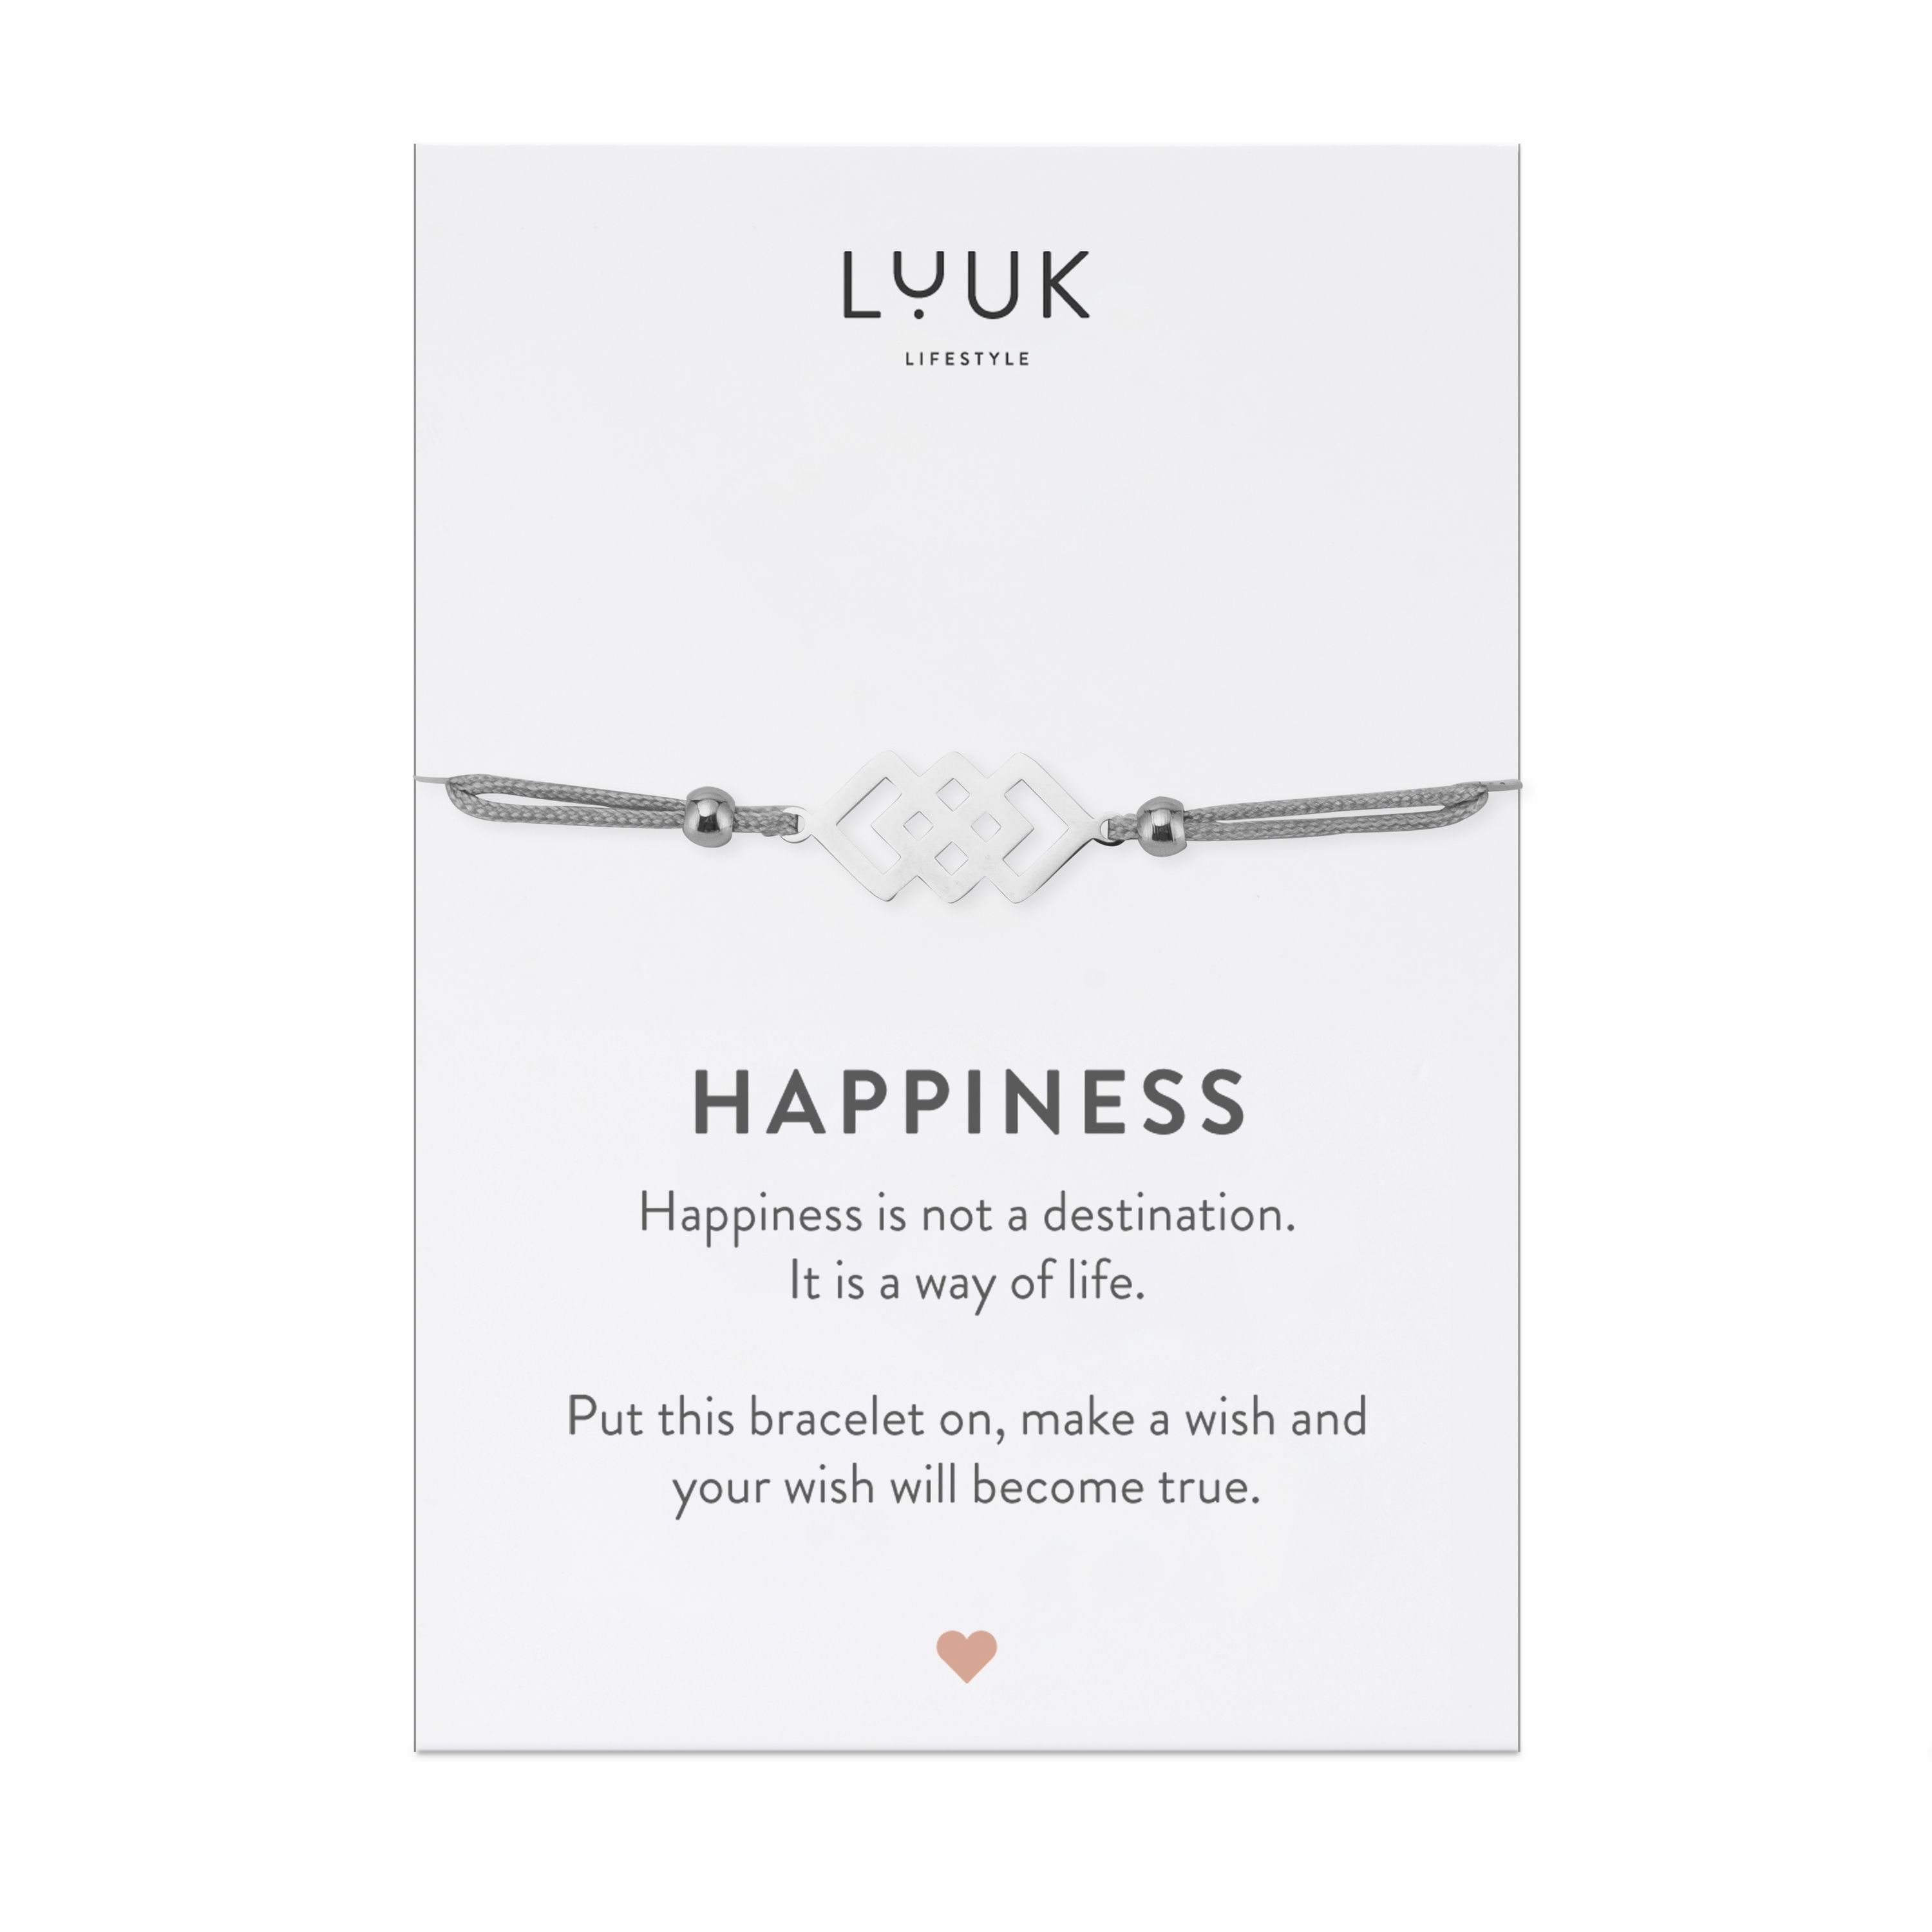 LUUK LIFESTYLE Freundschaftsarmband verschlungene Quadrate, handmade, mit Happiness Spruchkarte Silber | Armbänder